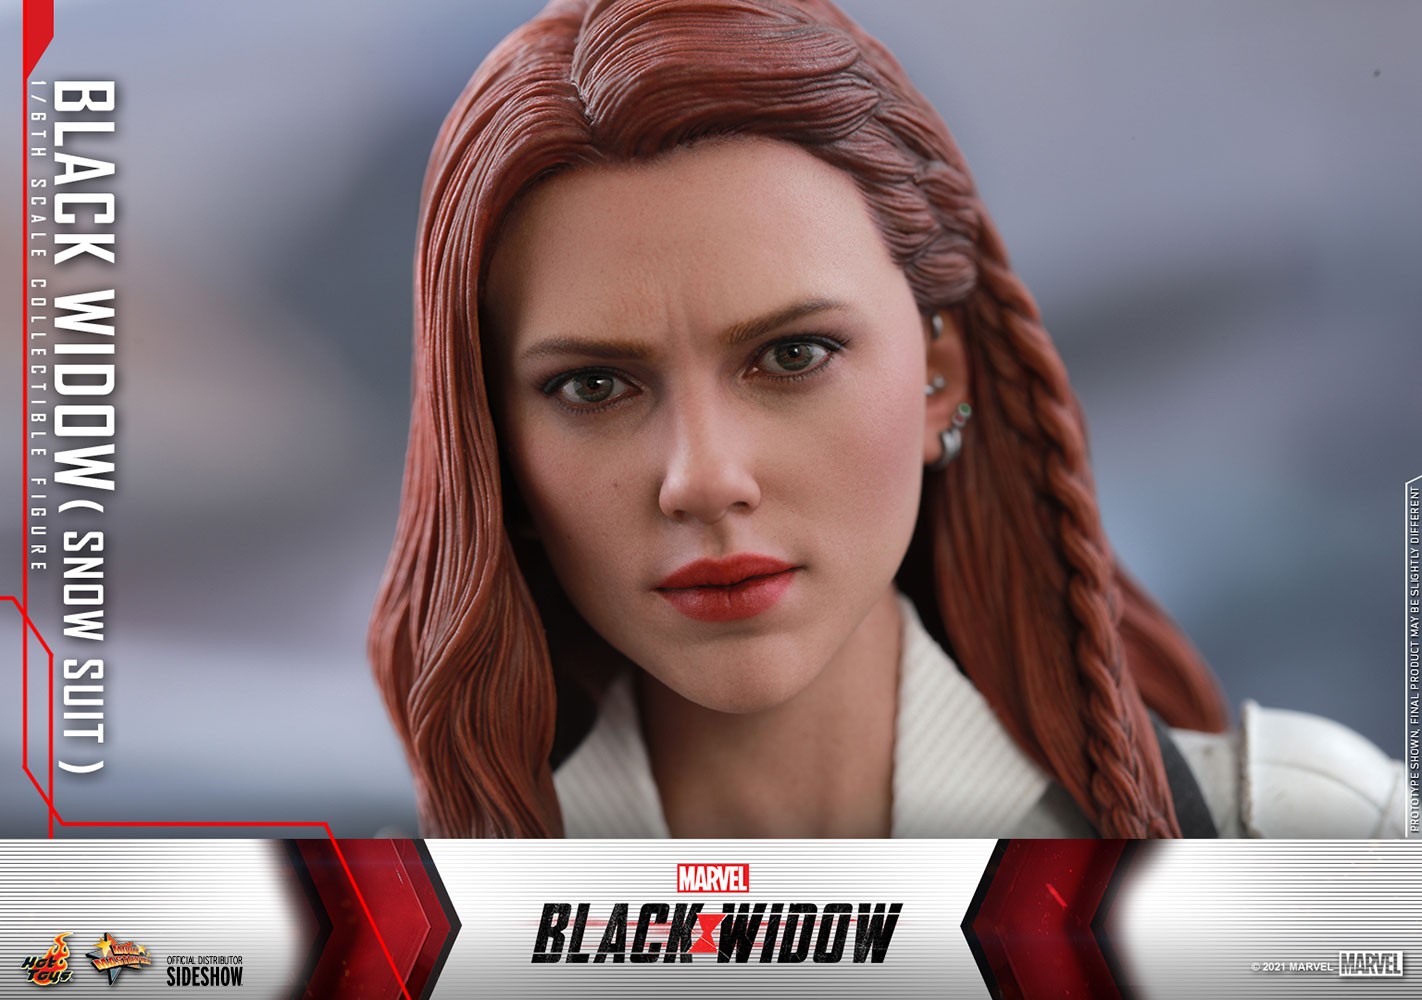 Black Widow- Prototype Shown